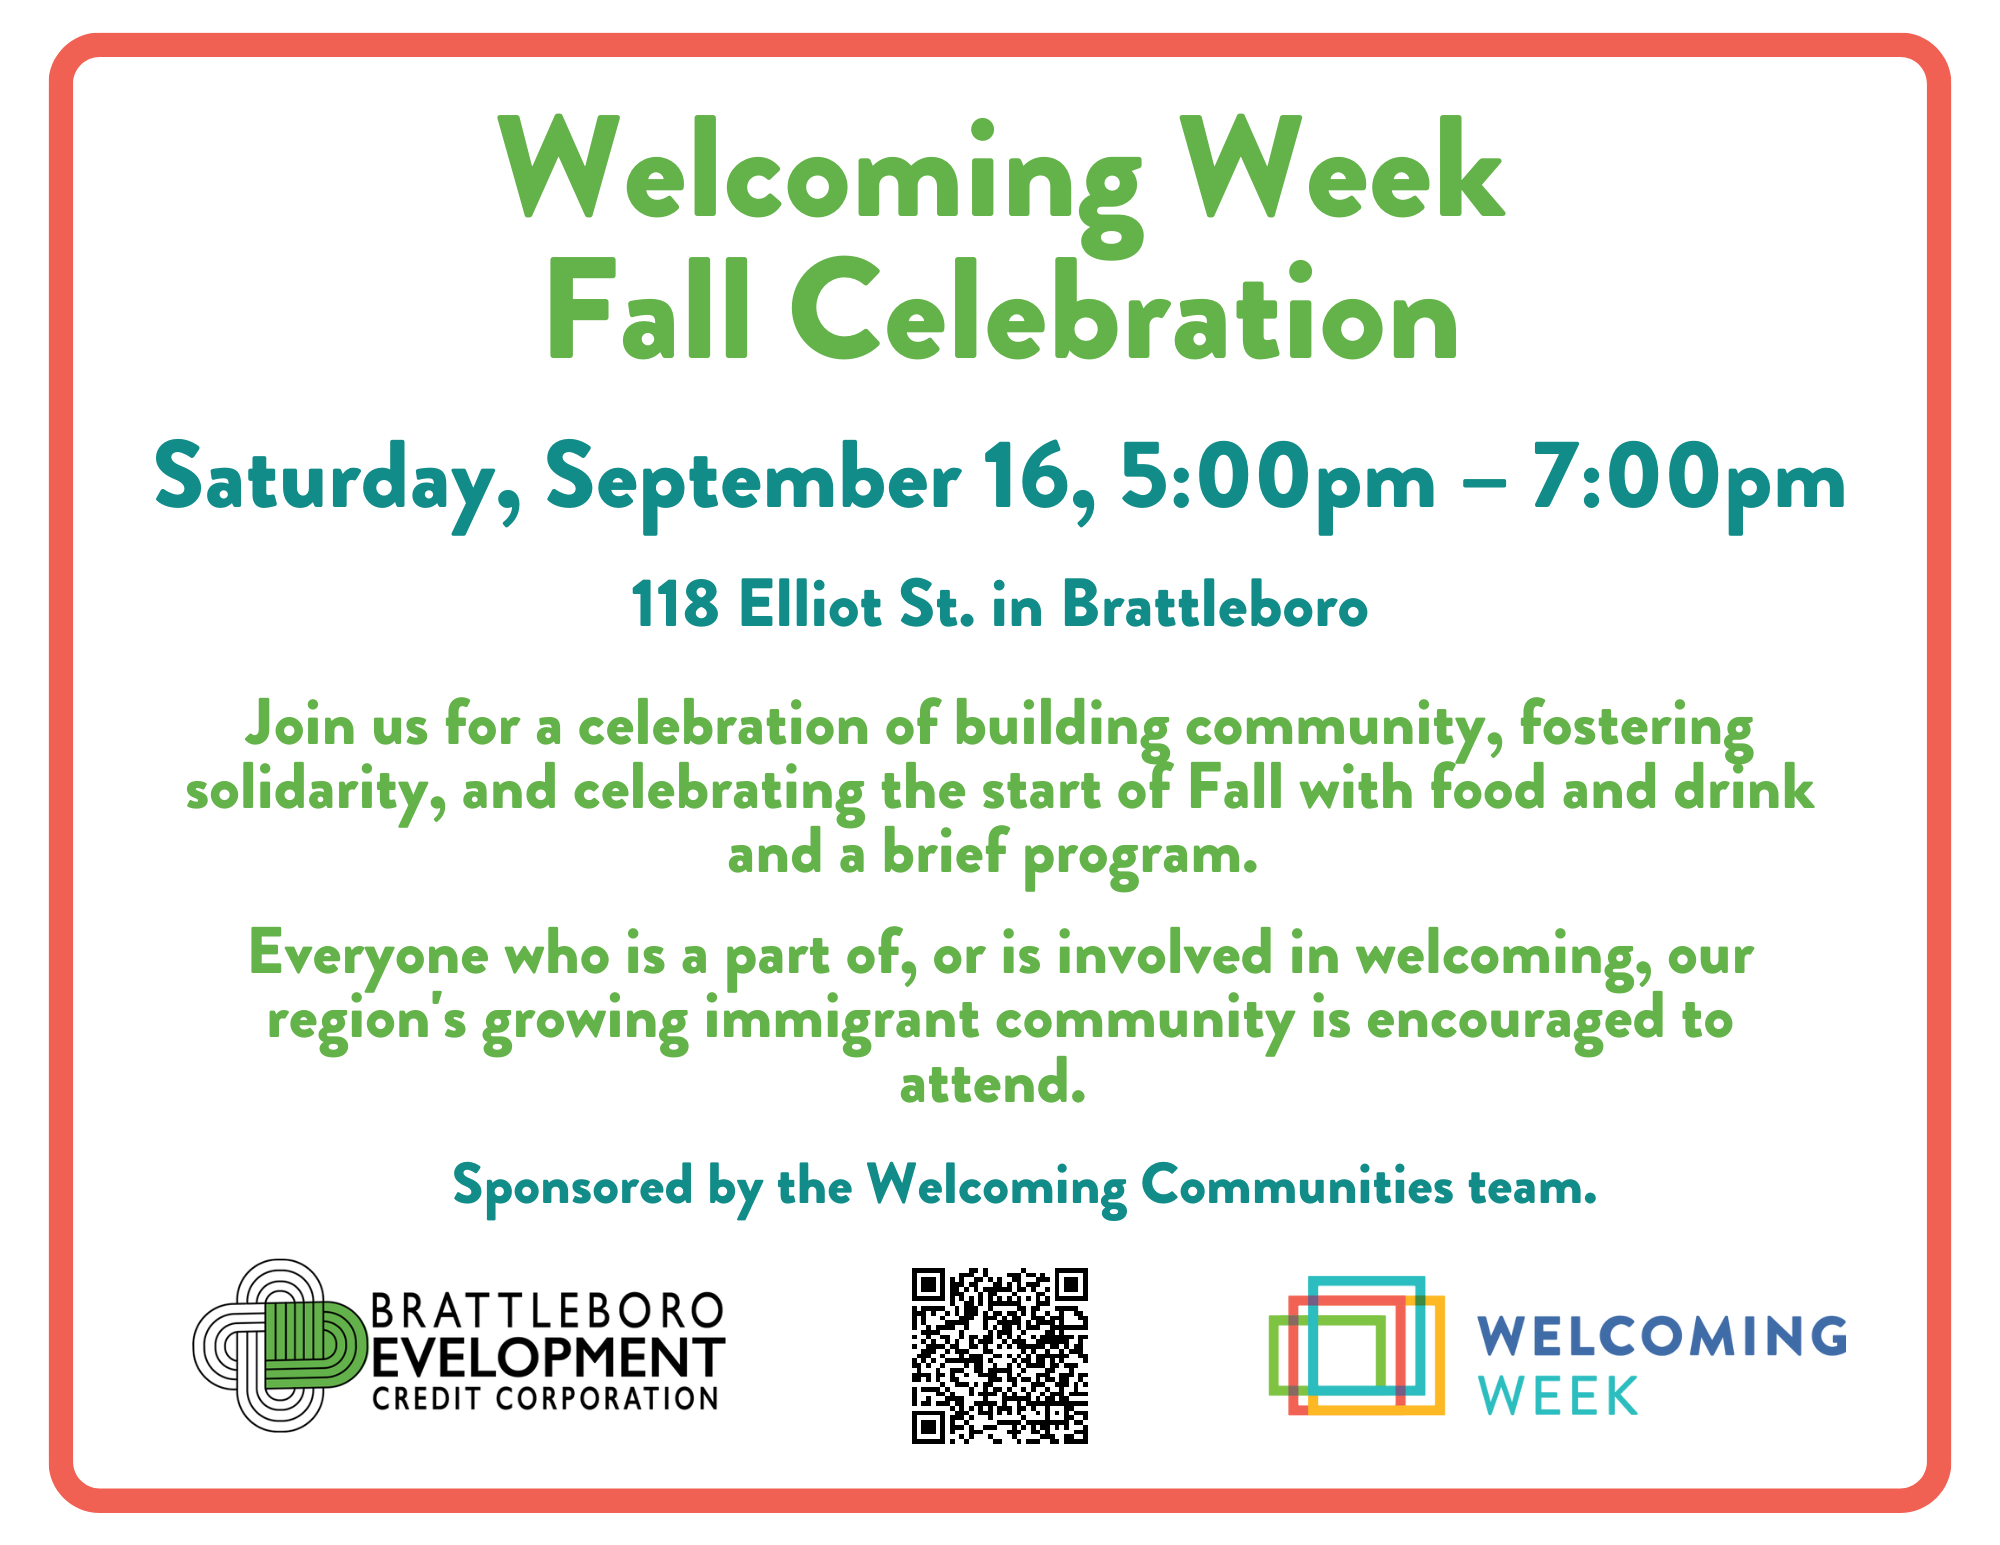 Welcoming Communities To Host Welcoming Week Celebration On Saturday, September 16